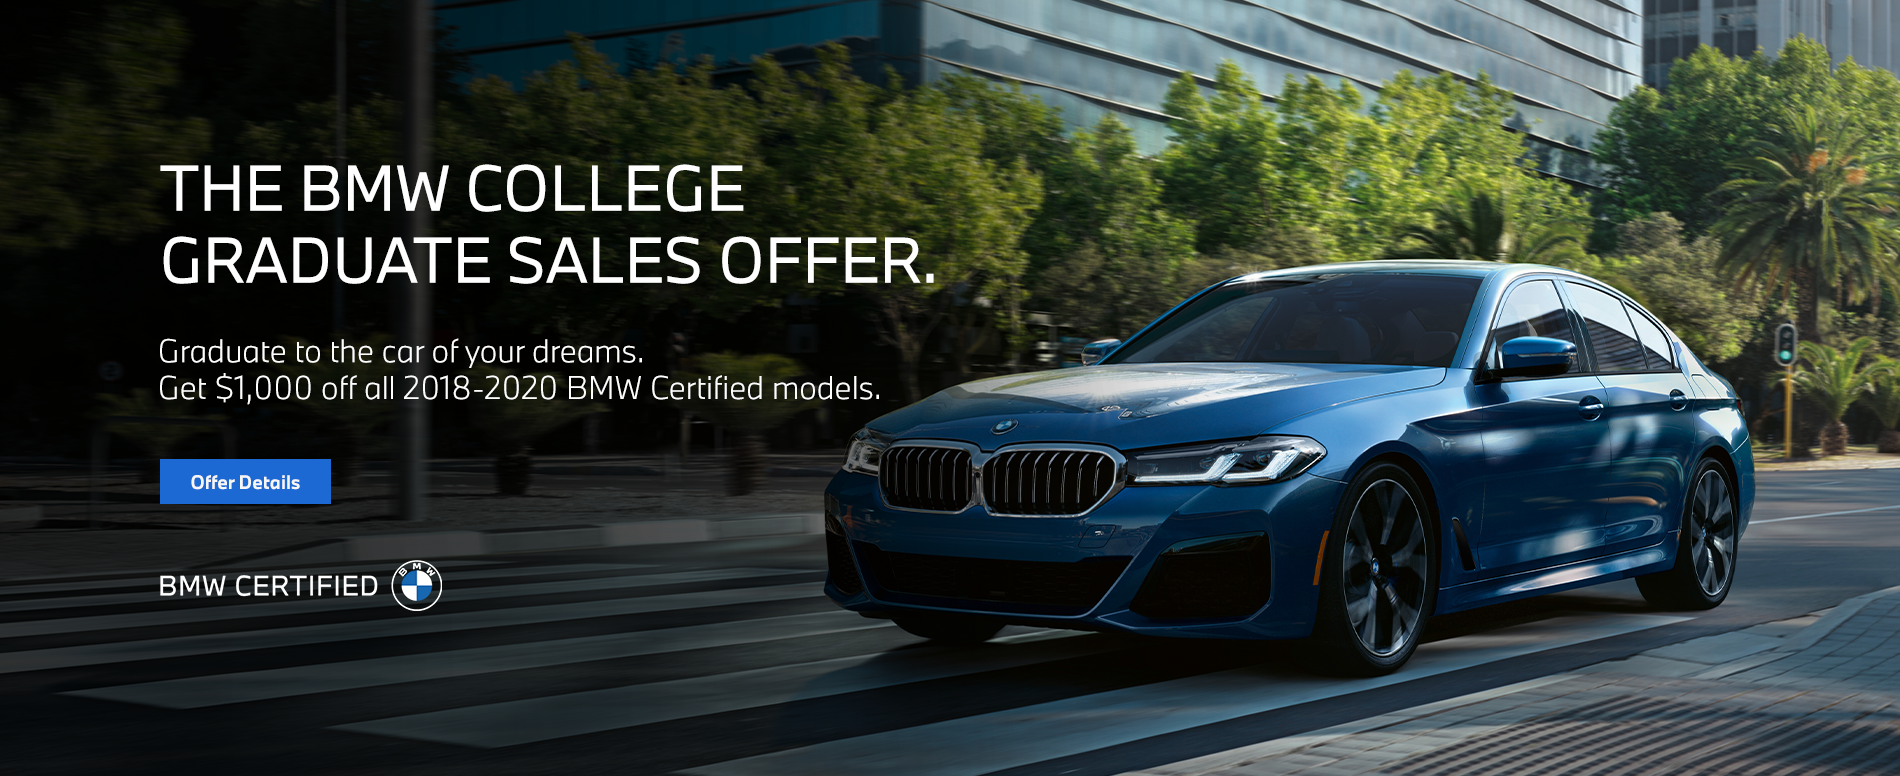 BMW College Graduate Sales Offer